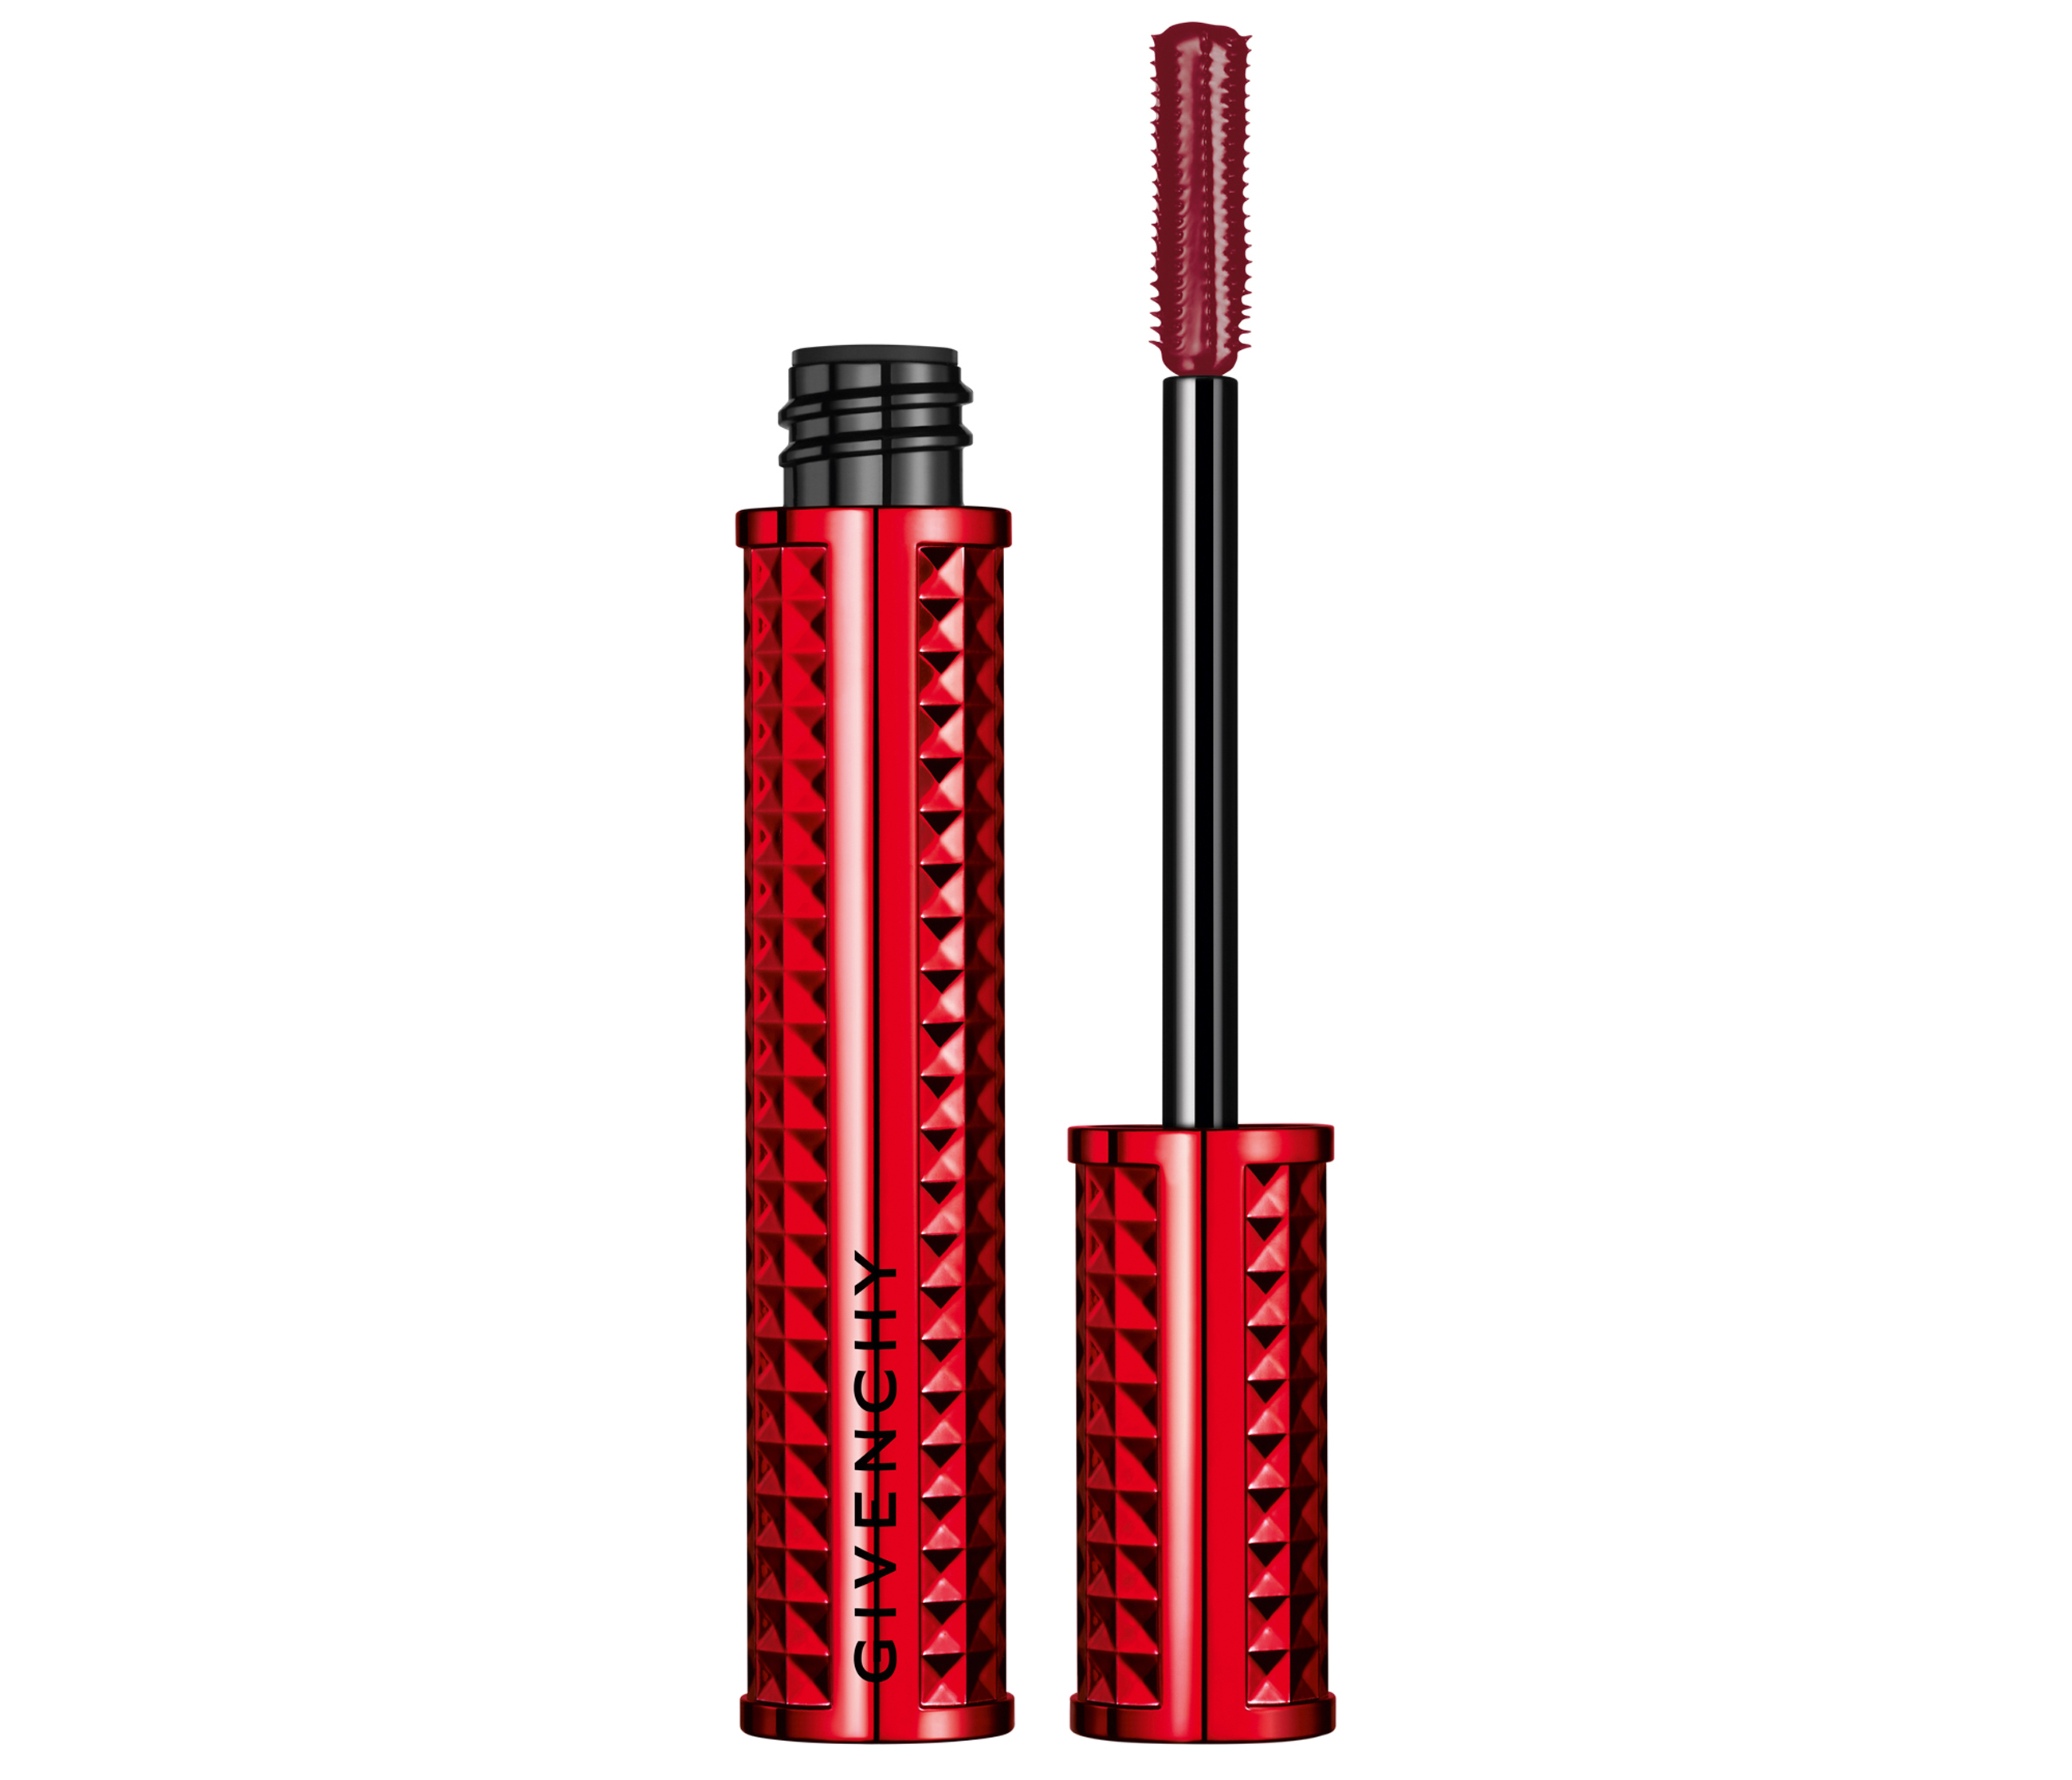 Givenchy Volume Disturbia’ 24-Hour Mascara Red Disturbia, £23.50/AED105.08, Debenhams